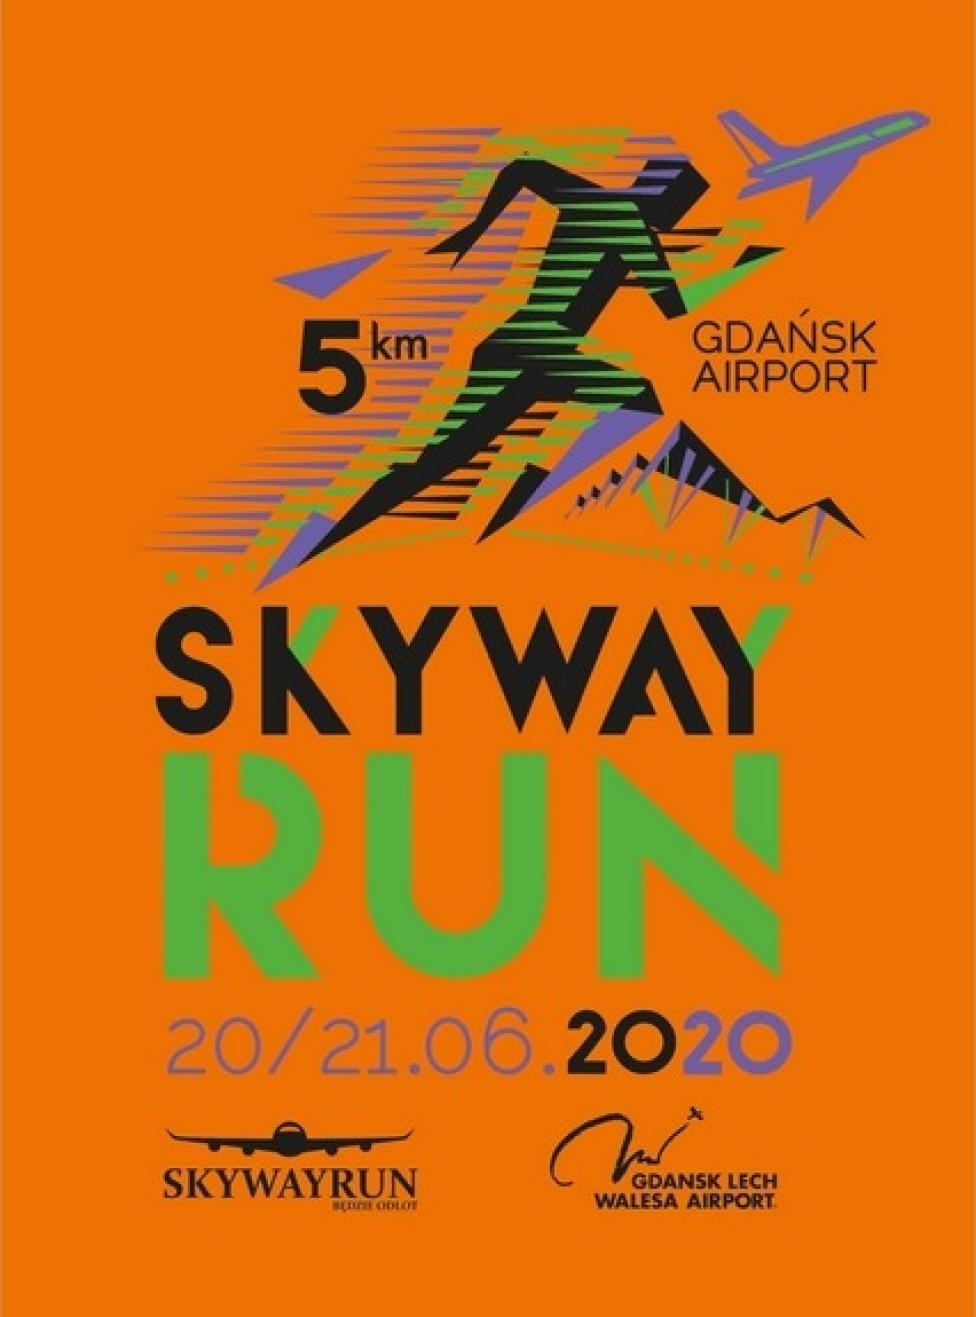 Skywayrun Gdańsk Airport 2020 - plakat (fot. skywayrun.pl)